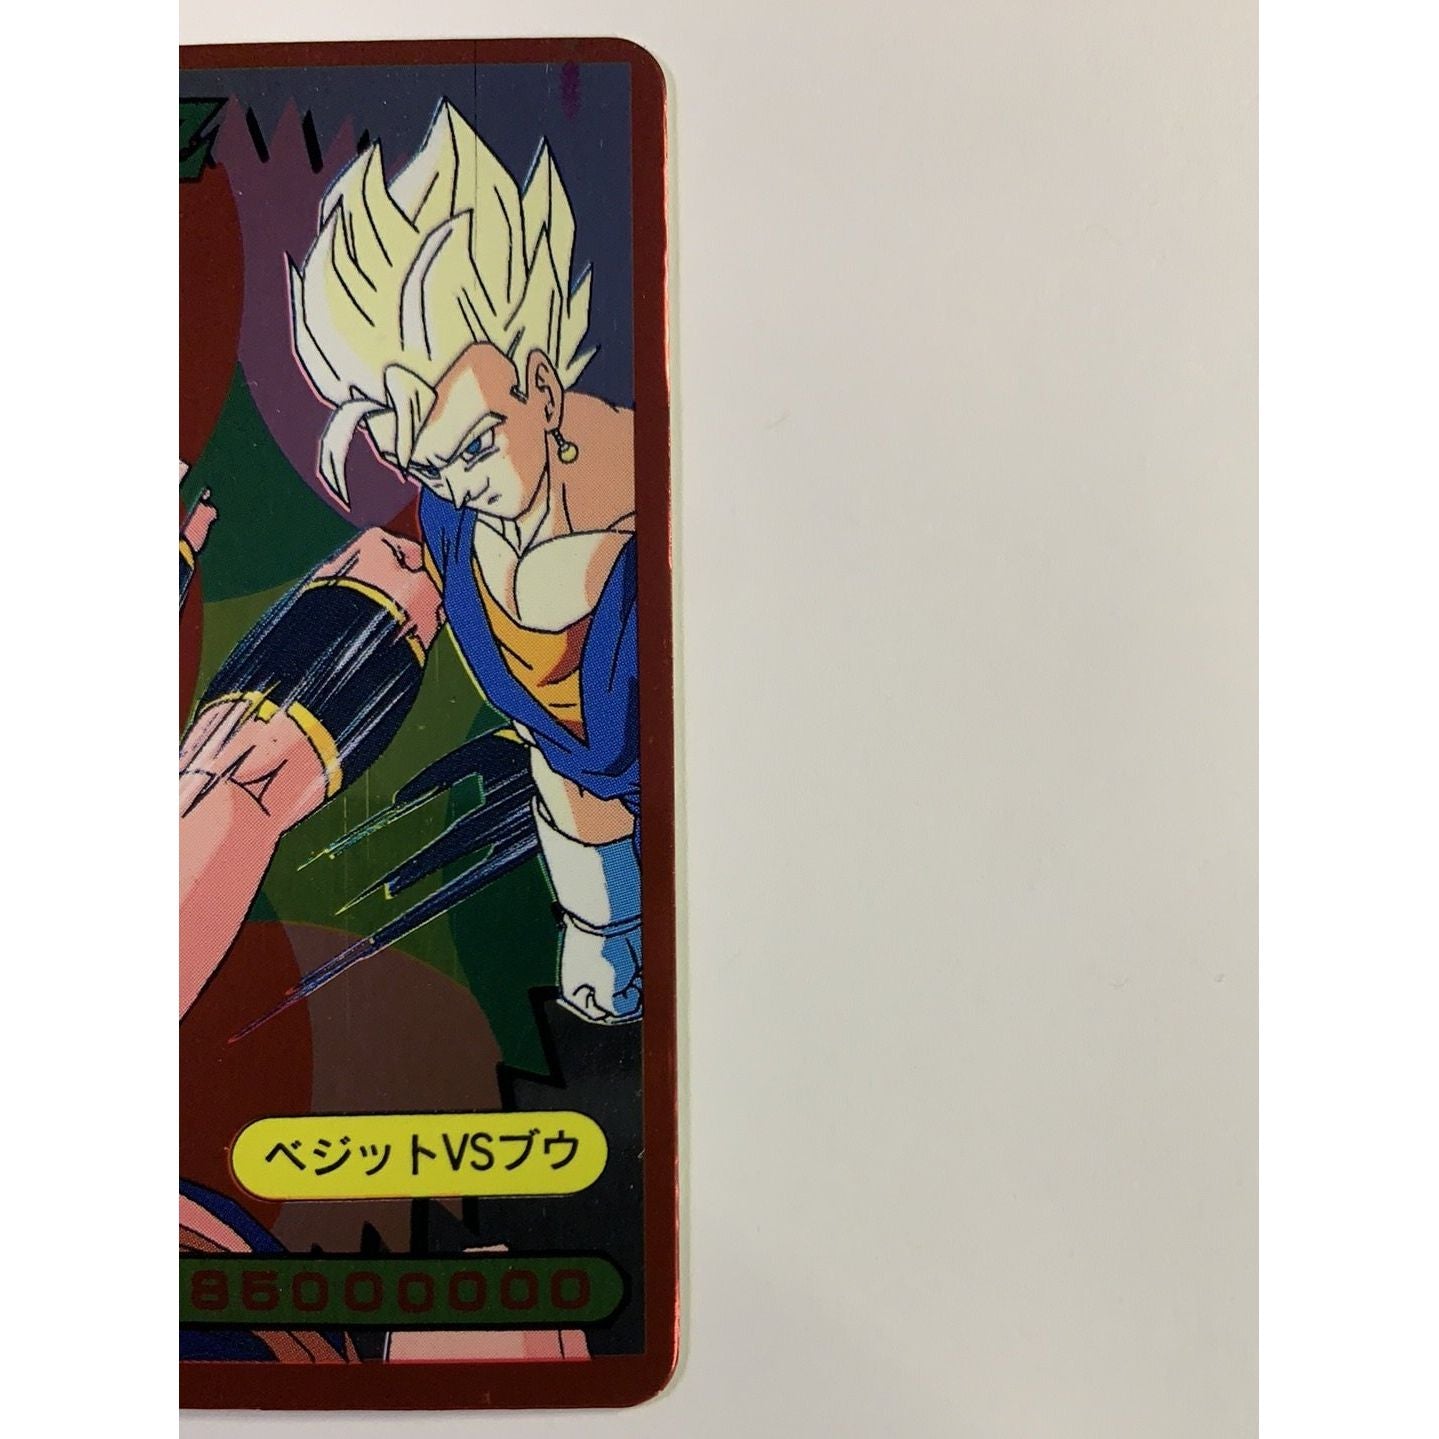  1995 Cardass Dragon Ball Z Mini Goku Outmaneuvers Majin Boo  Local Legends Cards & Collectibles